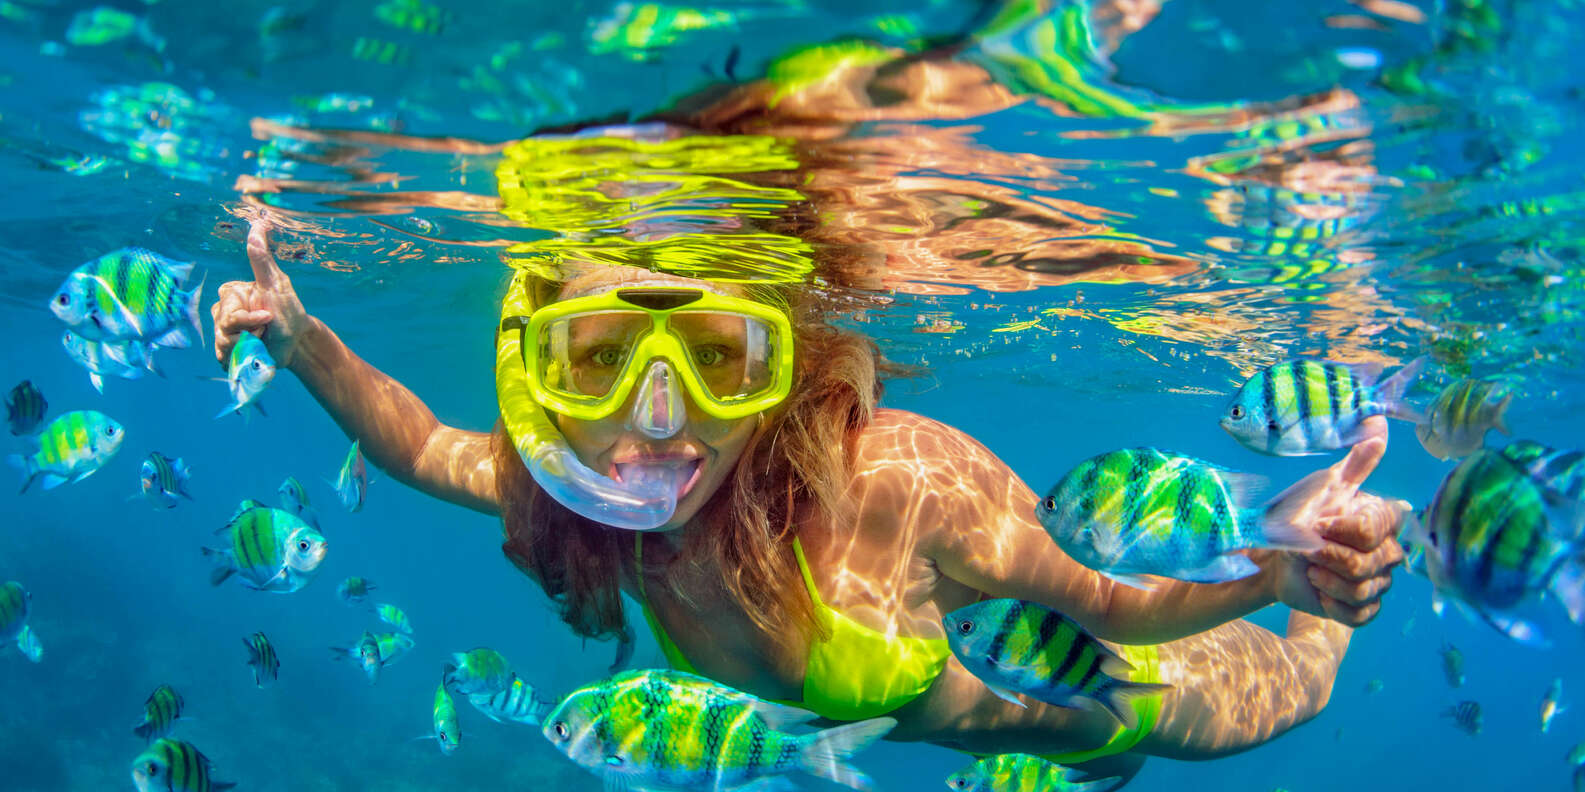 Best Snorkel and Diving Spots Near Cartagena